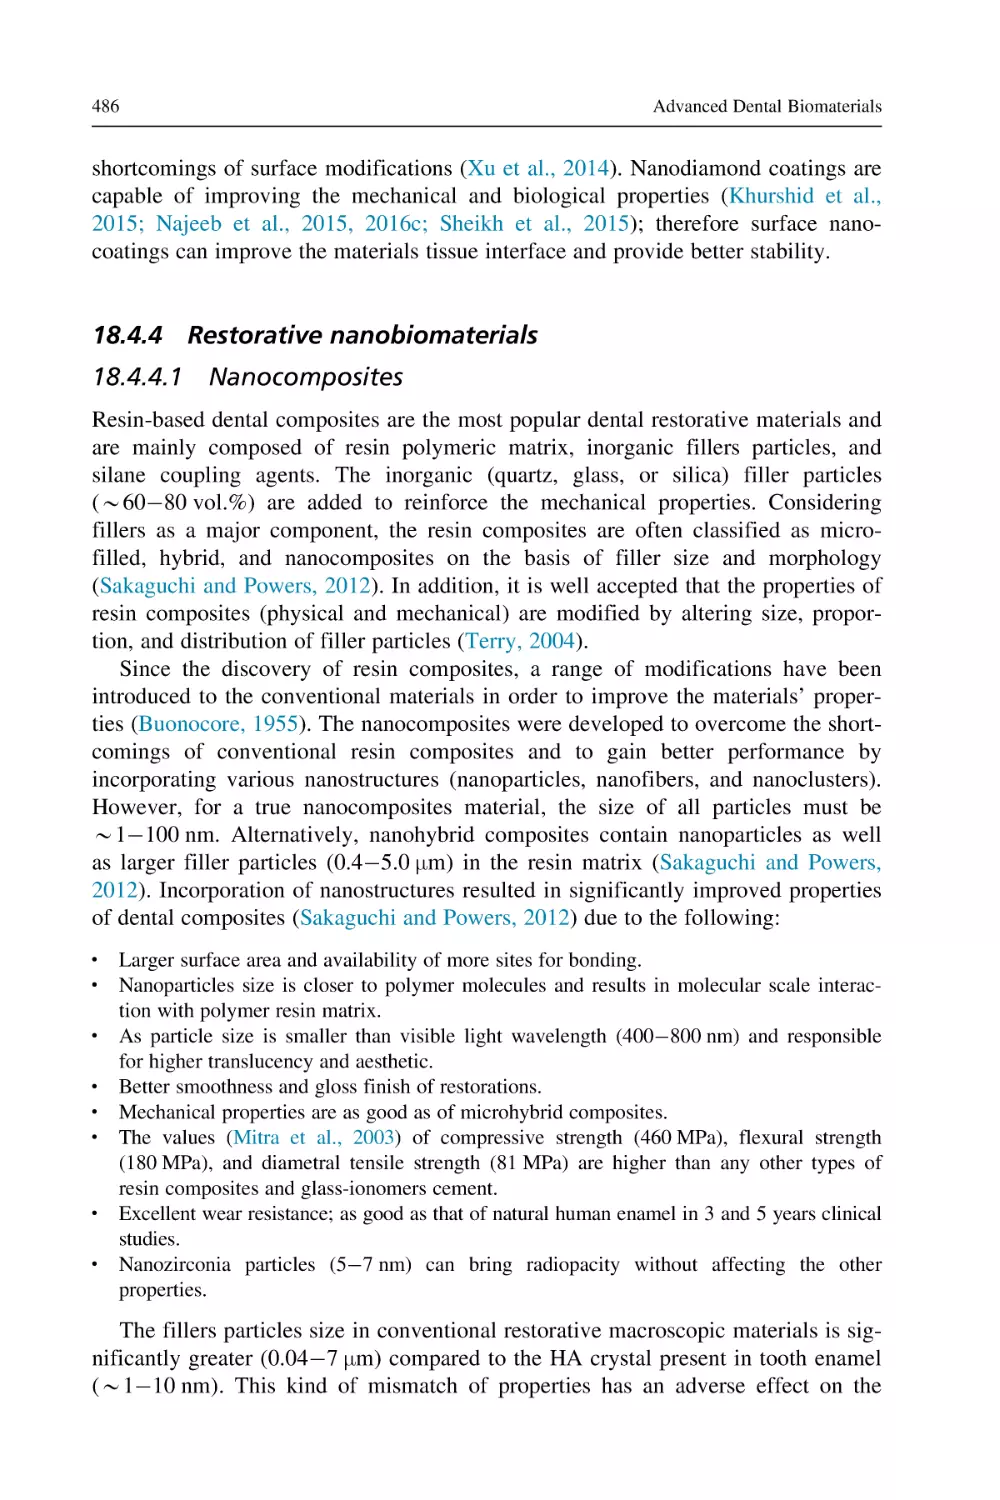 18.4.4 Restorative nanobiomaterials
18.4.4.1 Nanocomposites